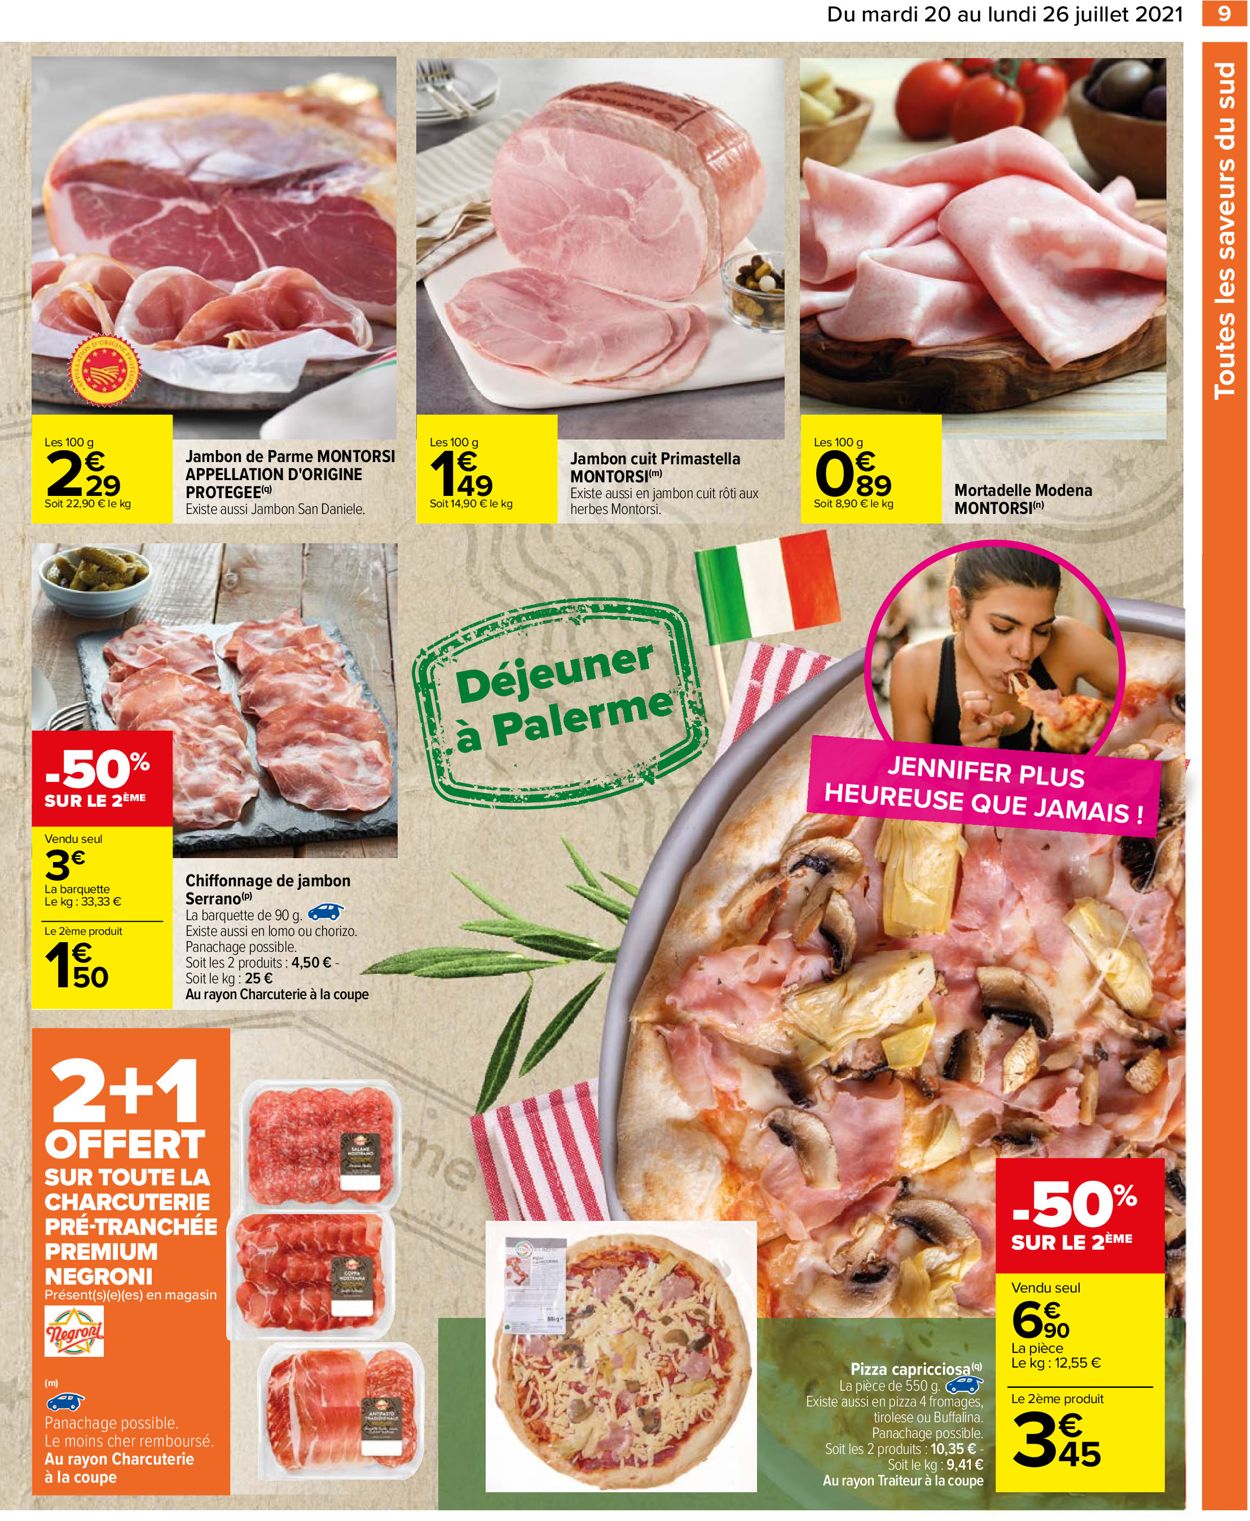 Carrefour Catalogue - 20.07-26.07.2021 (Page 11)